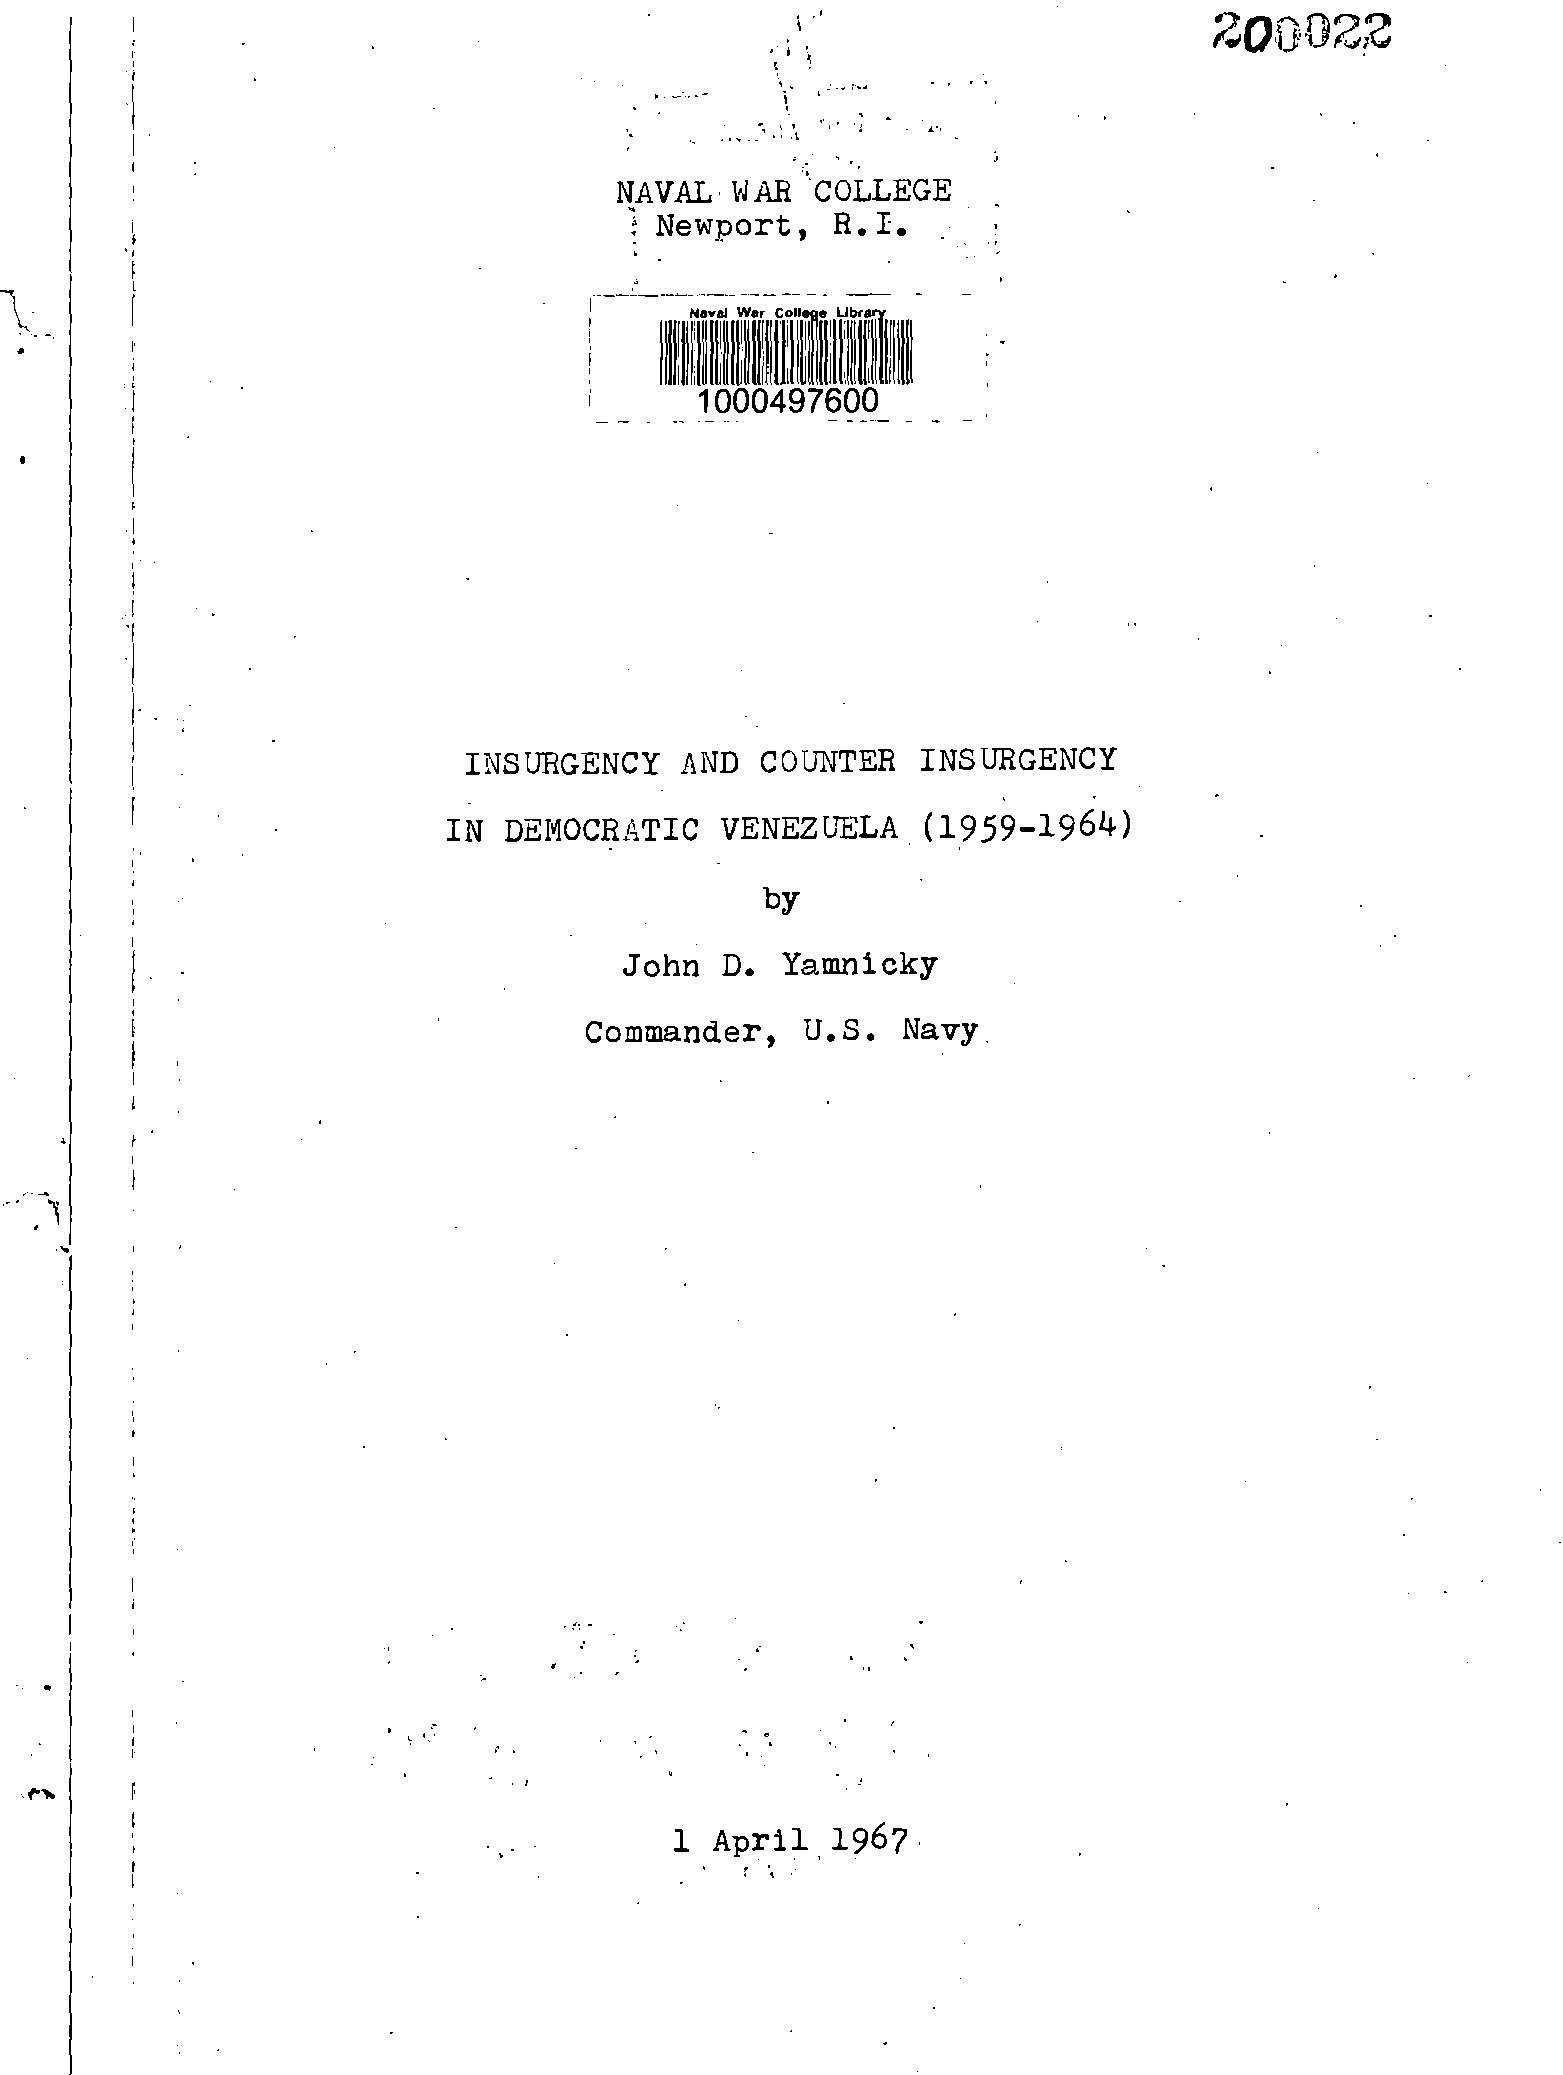 Insurgency and counter insurgency in democratic Venezuela (1959-1964), John D. Yamnicky